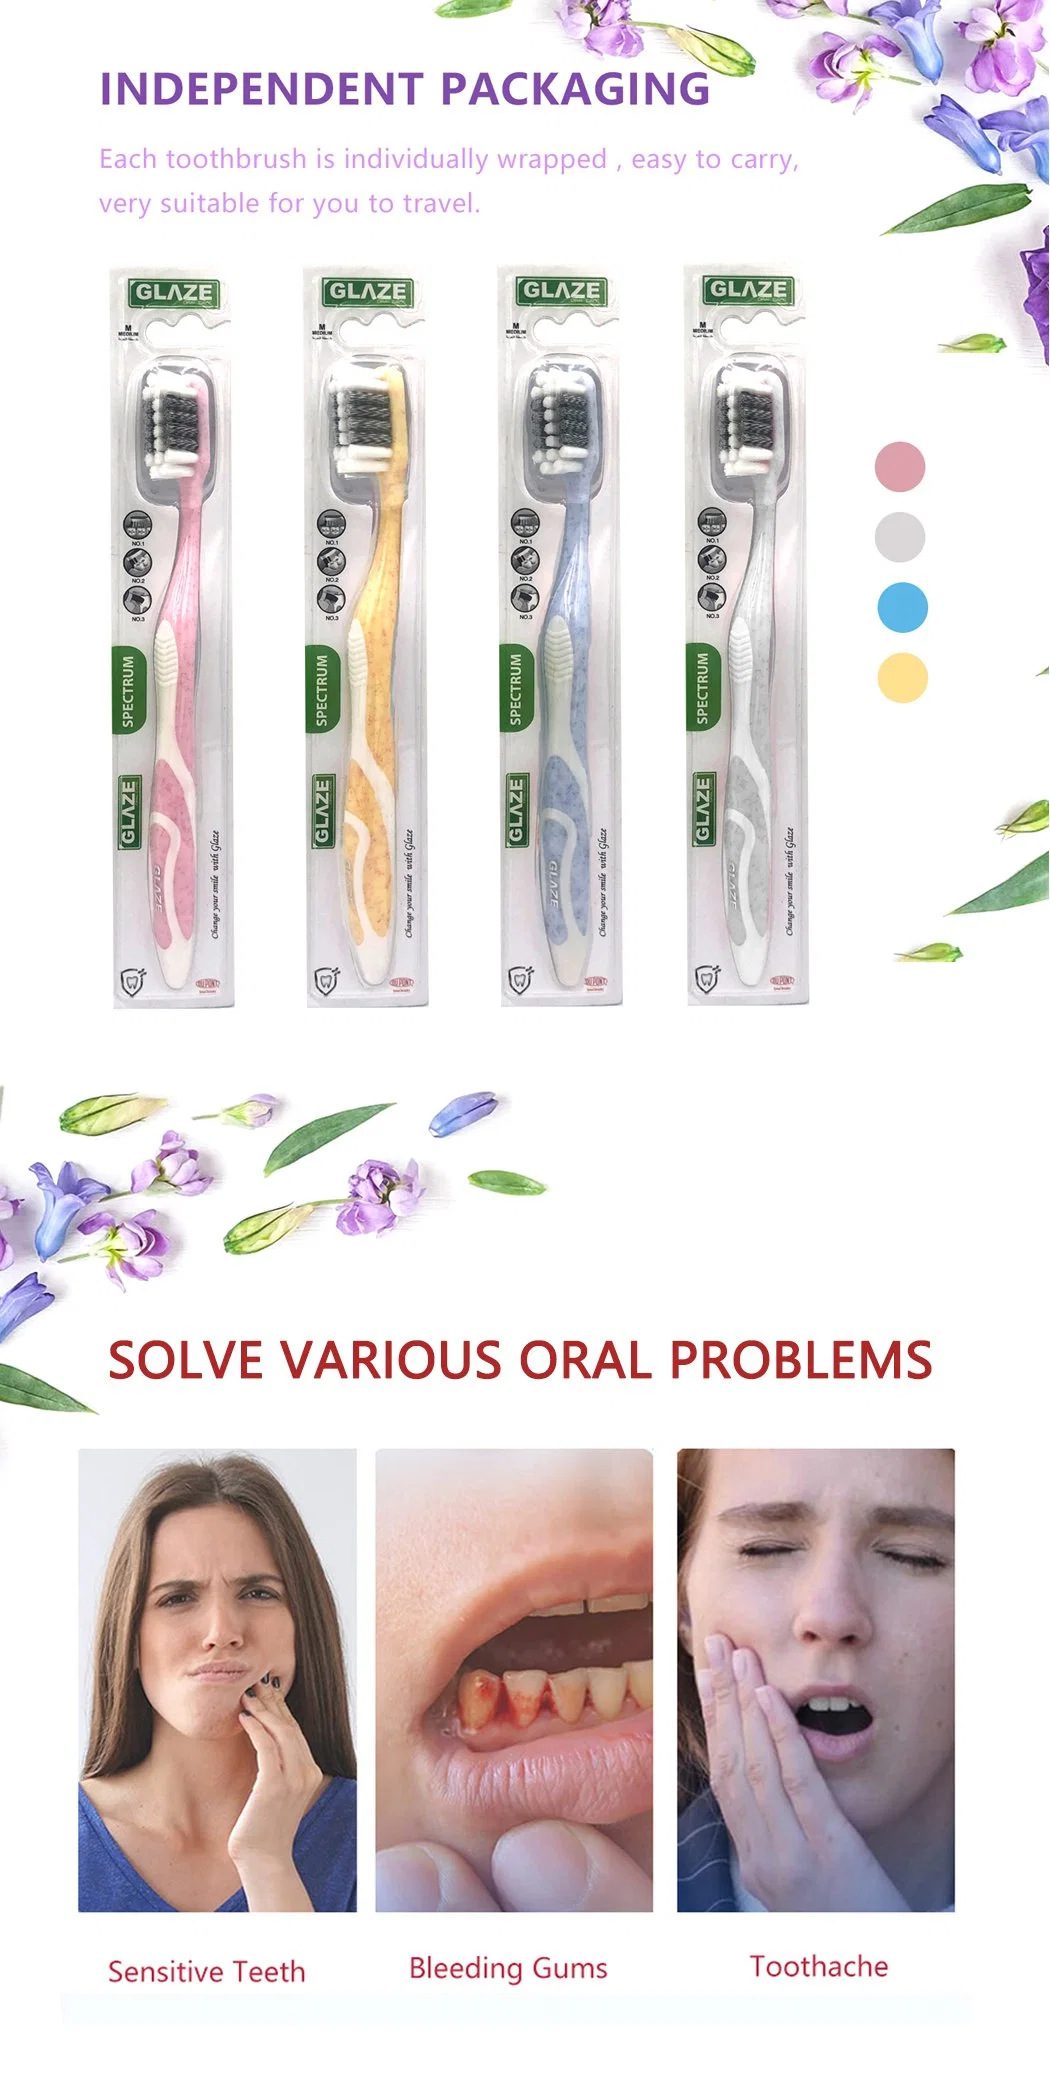 High Quality Soft Spiral Bristles Teeth Whitening Adult Manual Toothbrush